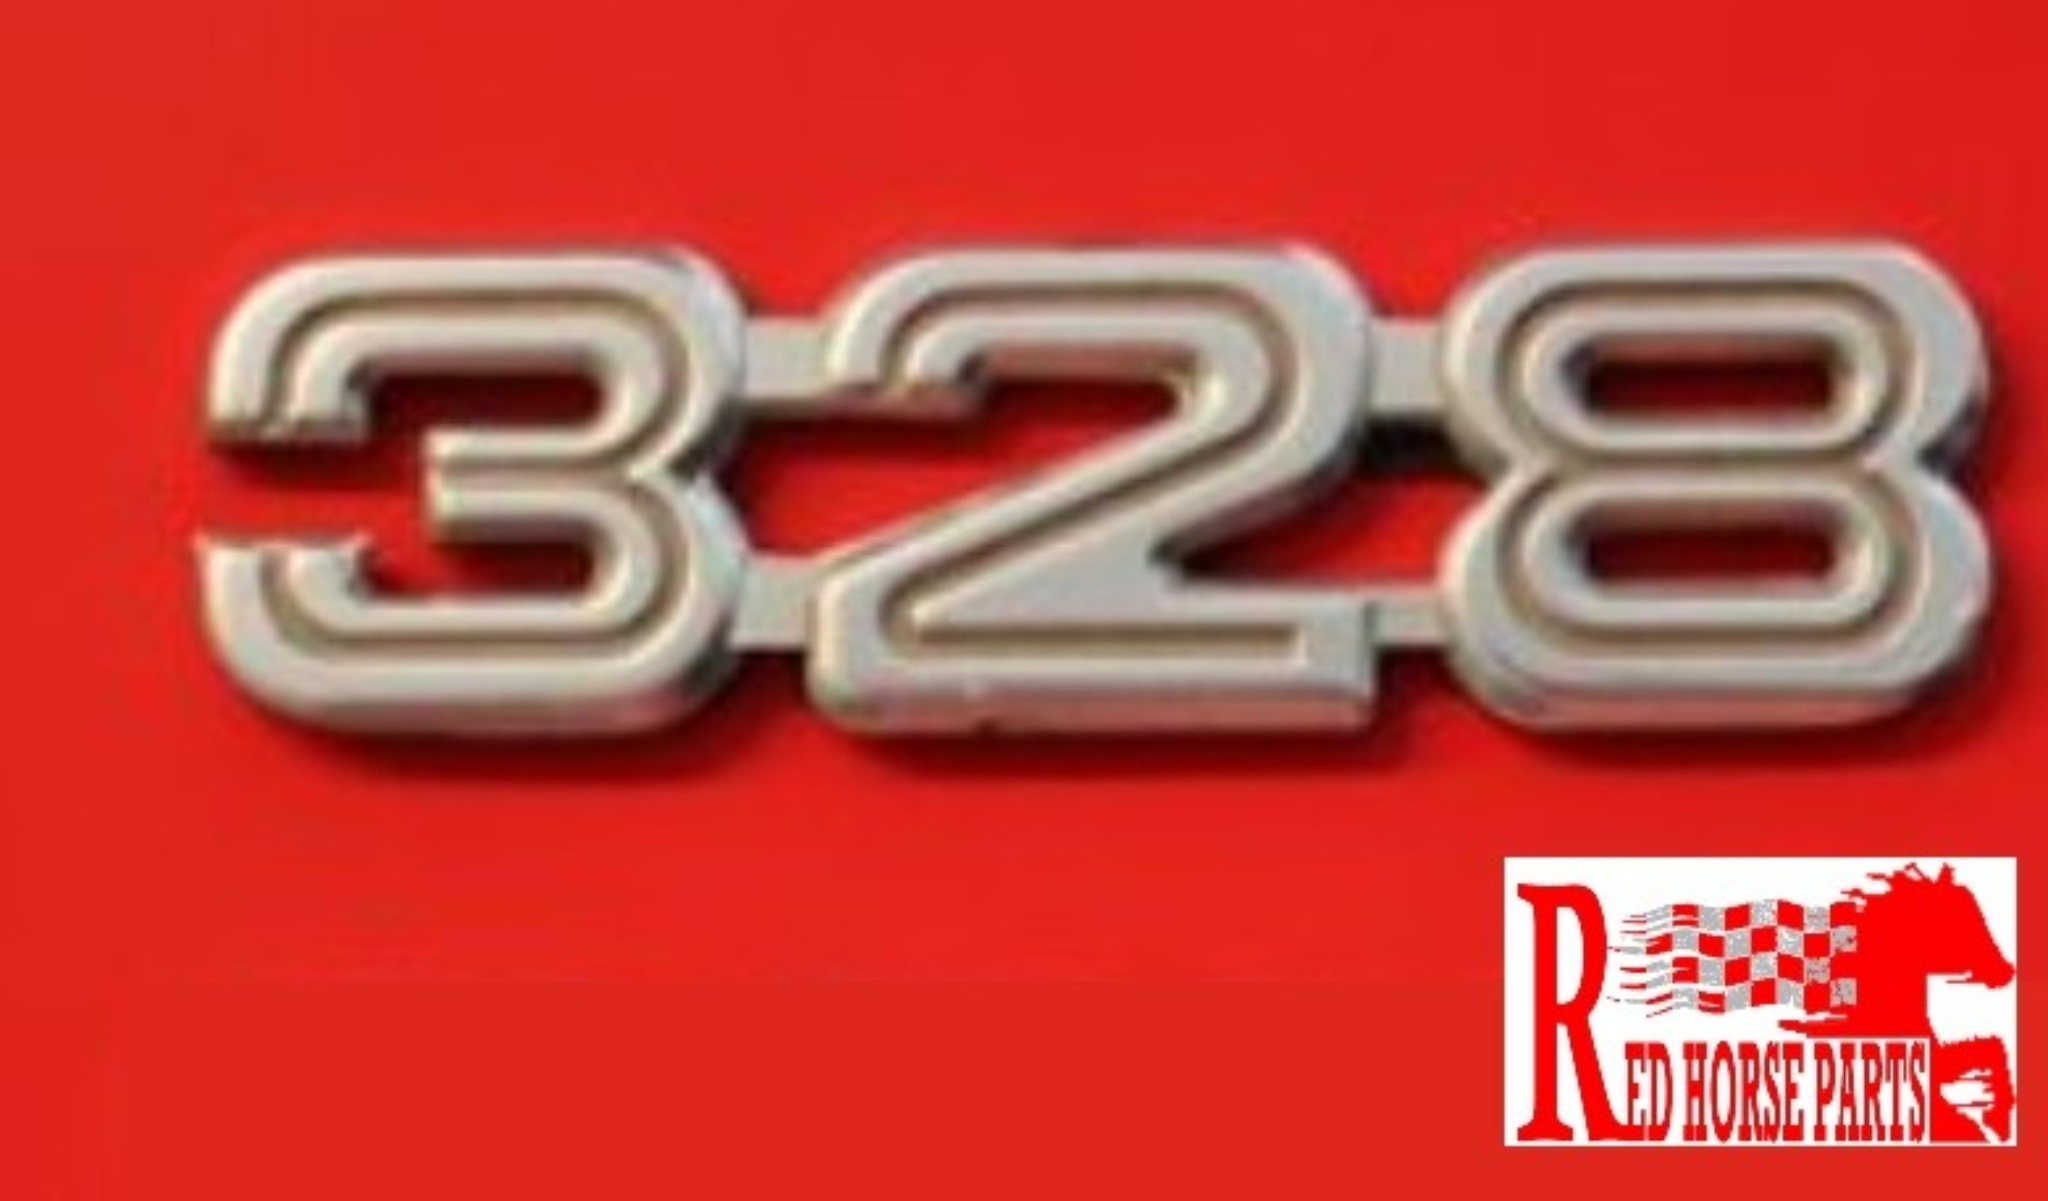 Ferrari 328 script